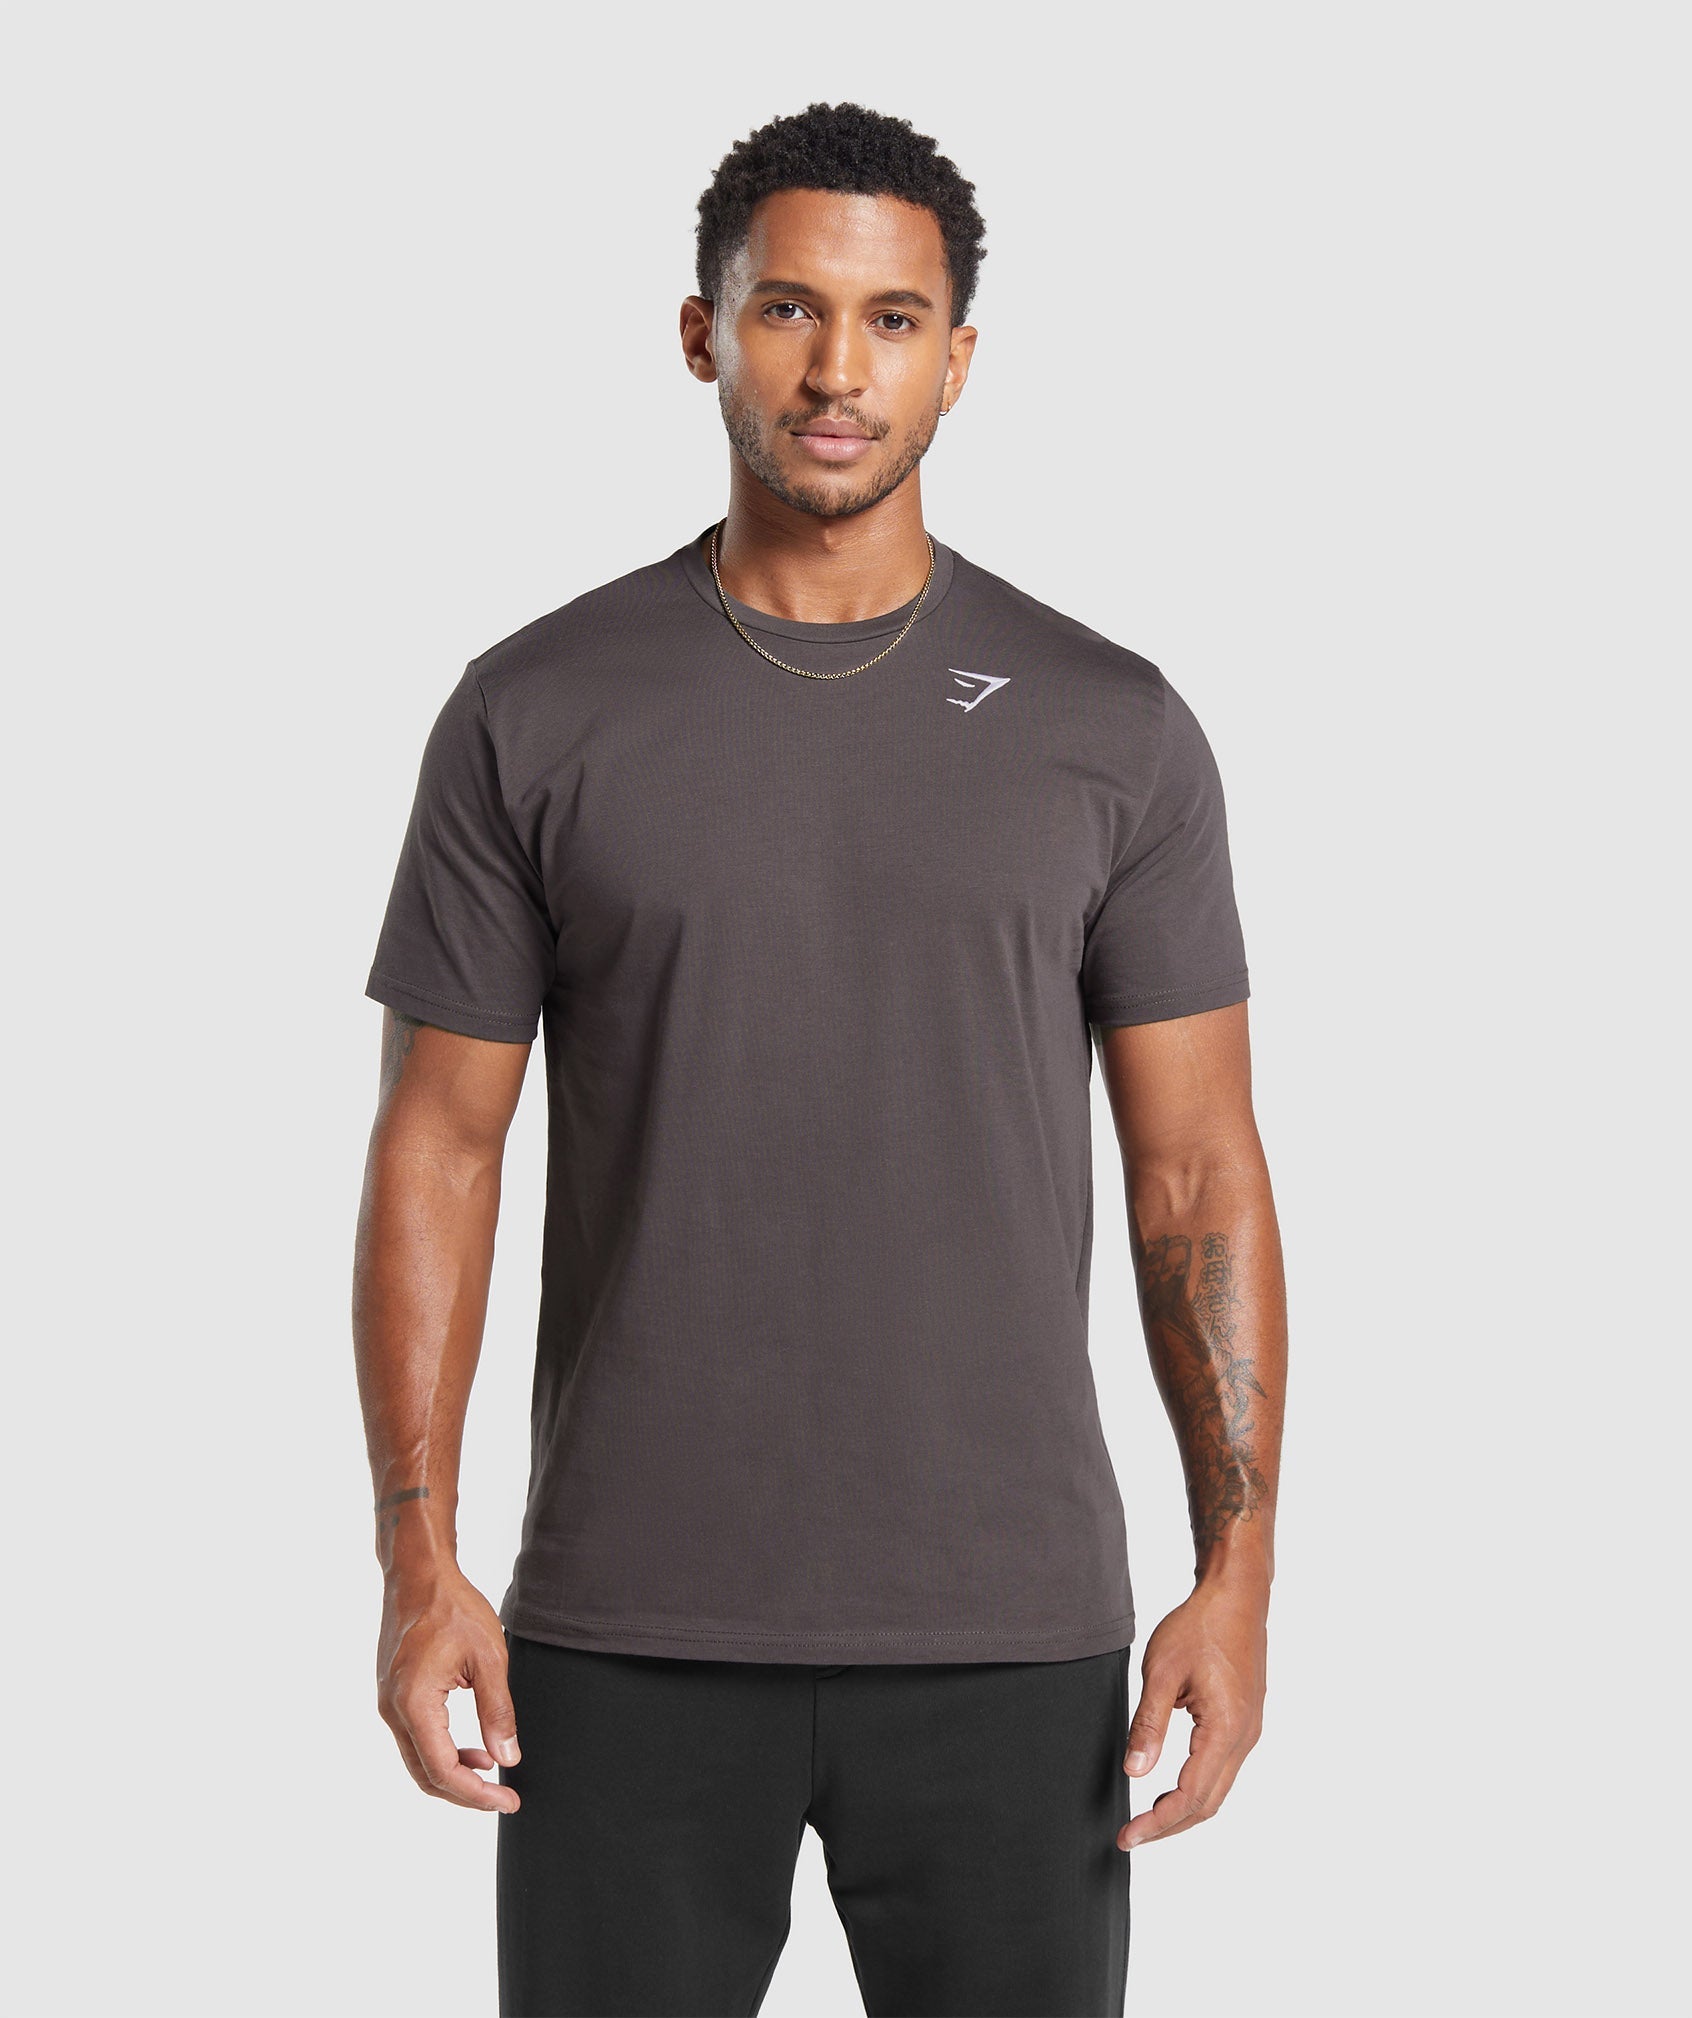 Gymshark Crest T-Shirt - Greyed Purple